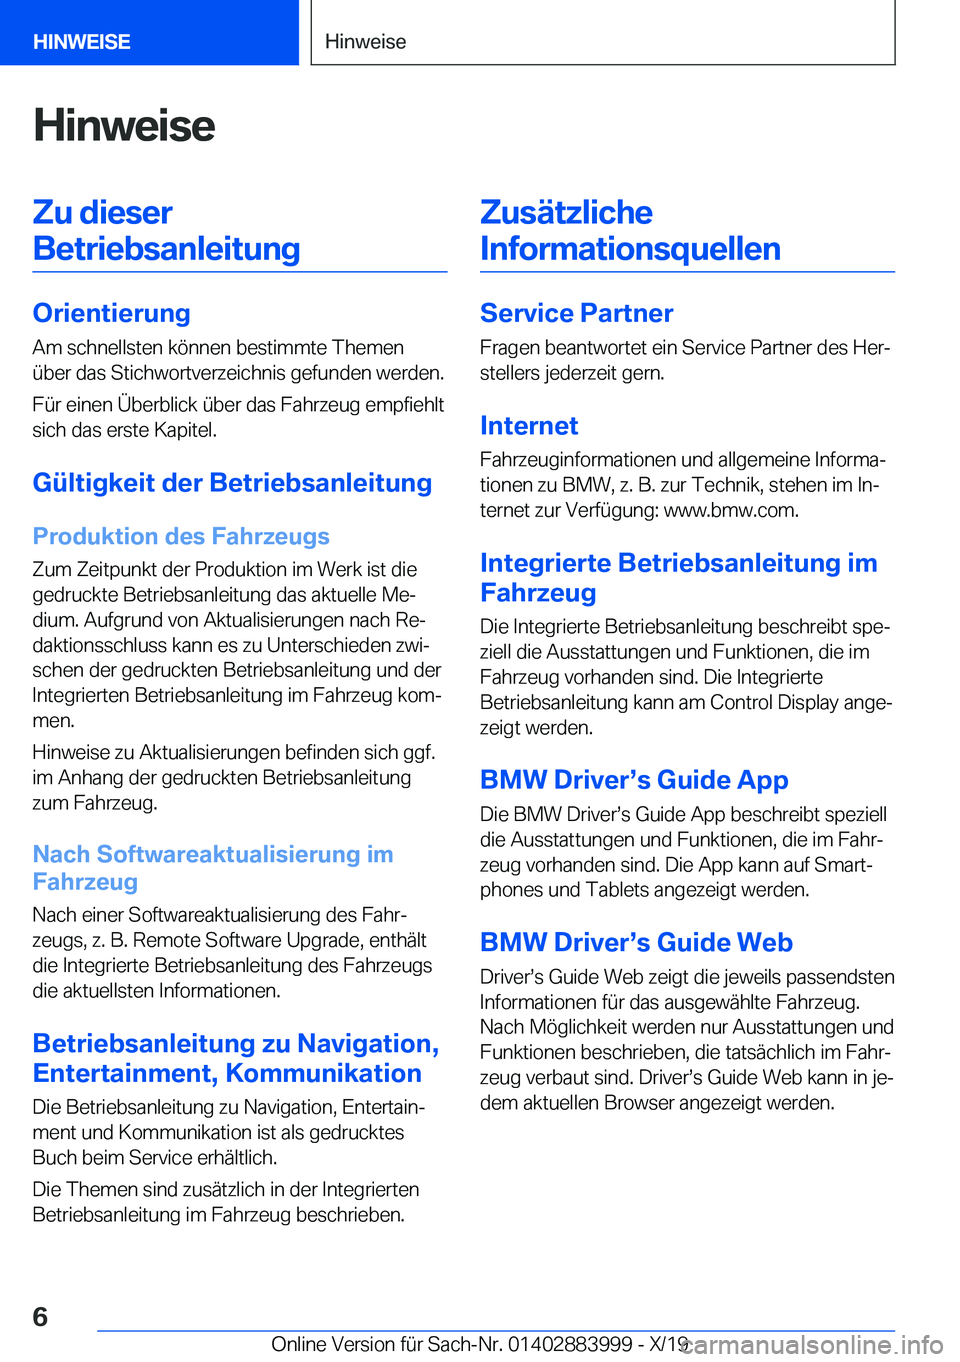 BMW X7 2020  Betriebsanleitungen (in German) �H�i�n�w�e�i�s�e�Z�u��d�i�e�s�e�r�B�e�t�r�i�e�b�s�a�n�l�e�i�t�u�n�g
�O�r�i�e�n�t�i�e�r�u�n�g �A�m��s�c�h�n�e�l�l�s�t�e�n��k�